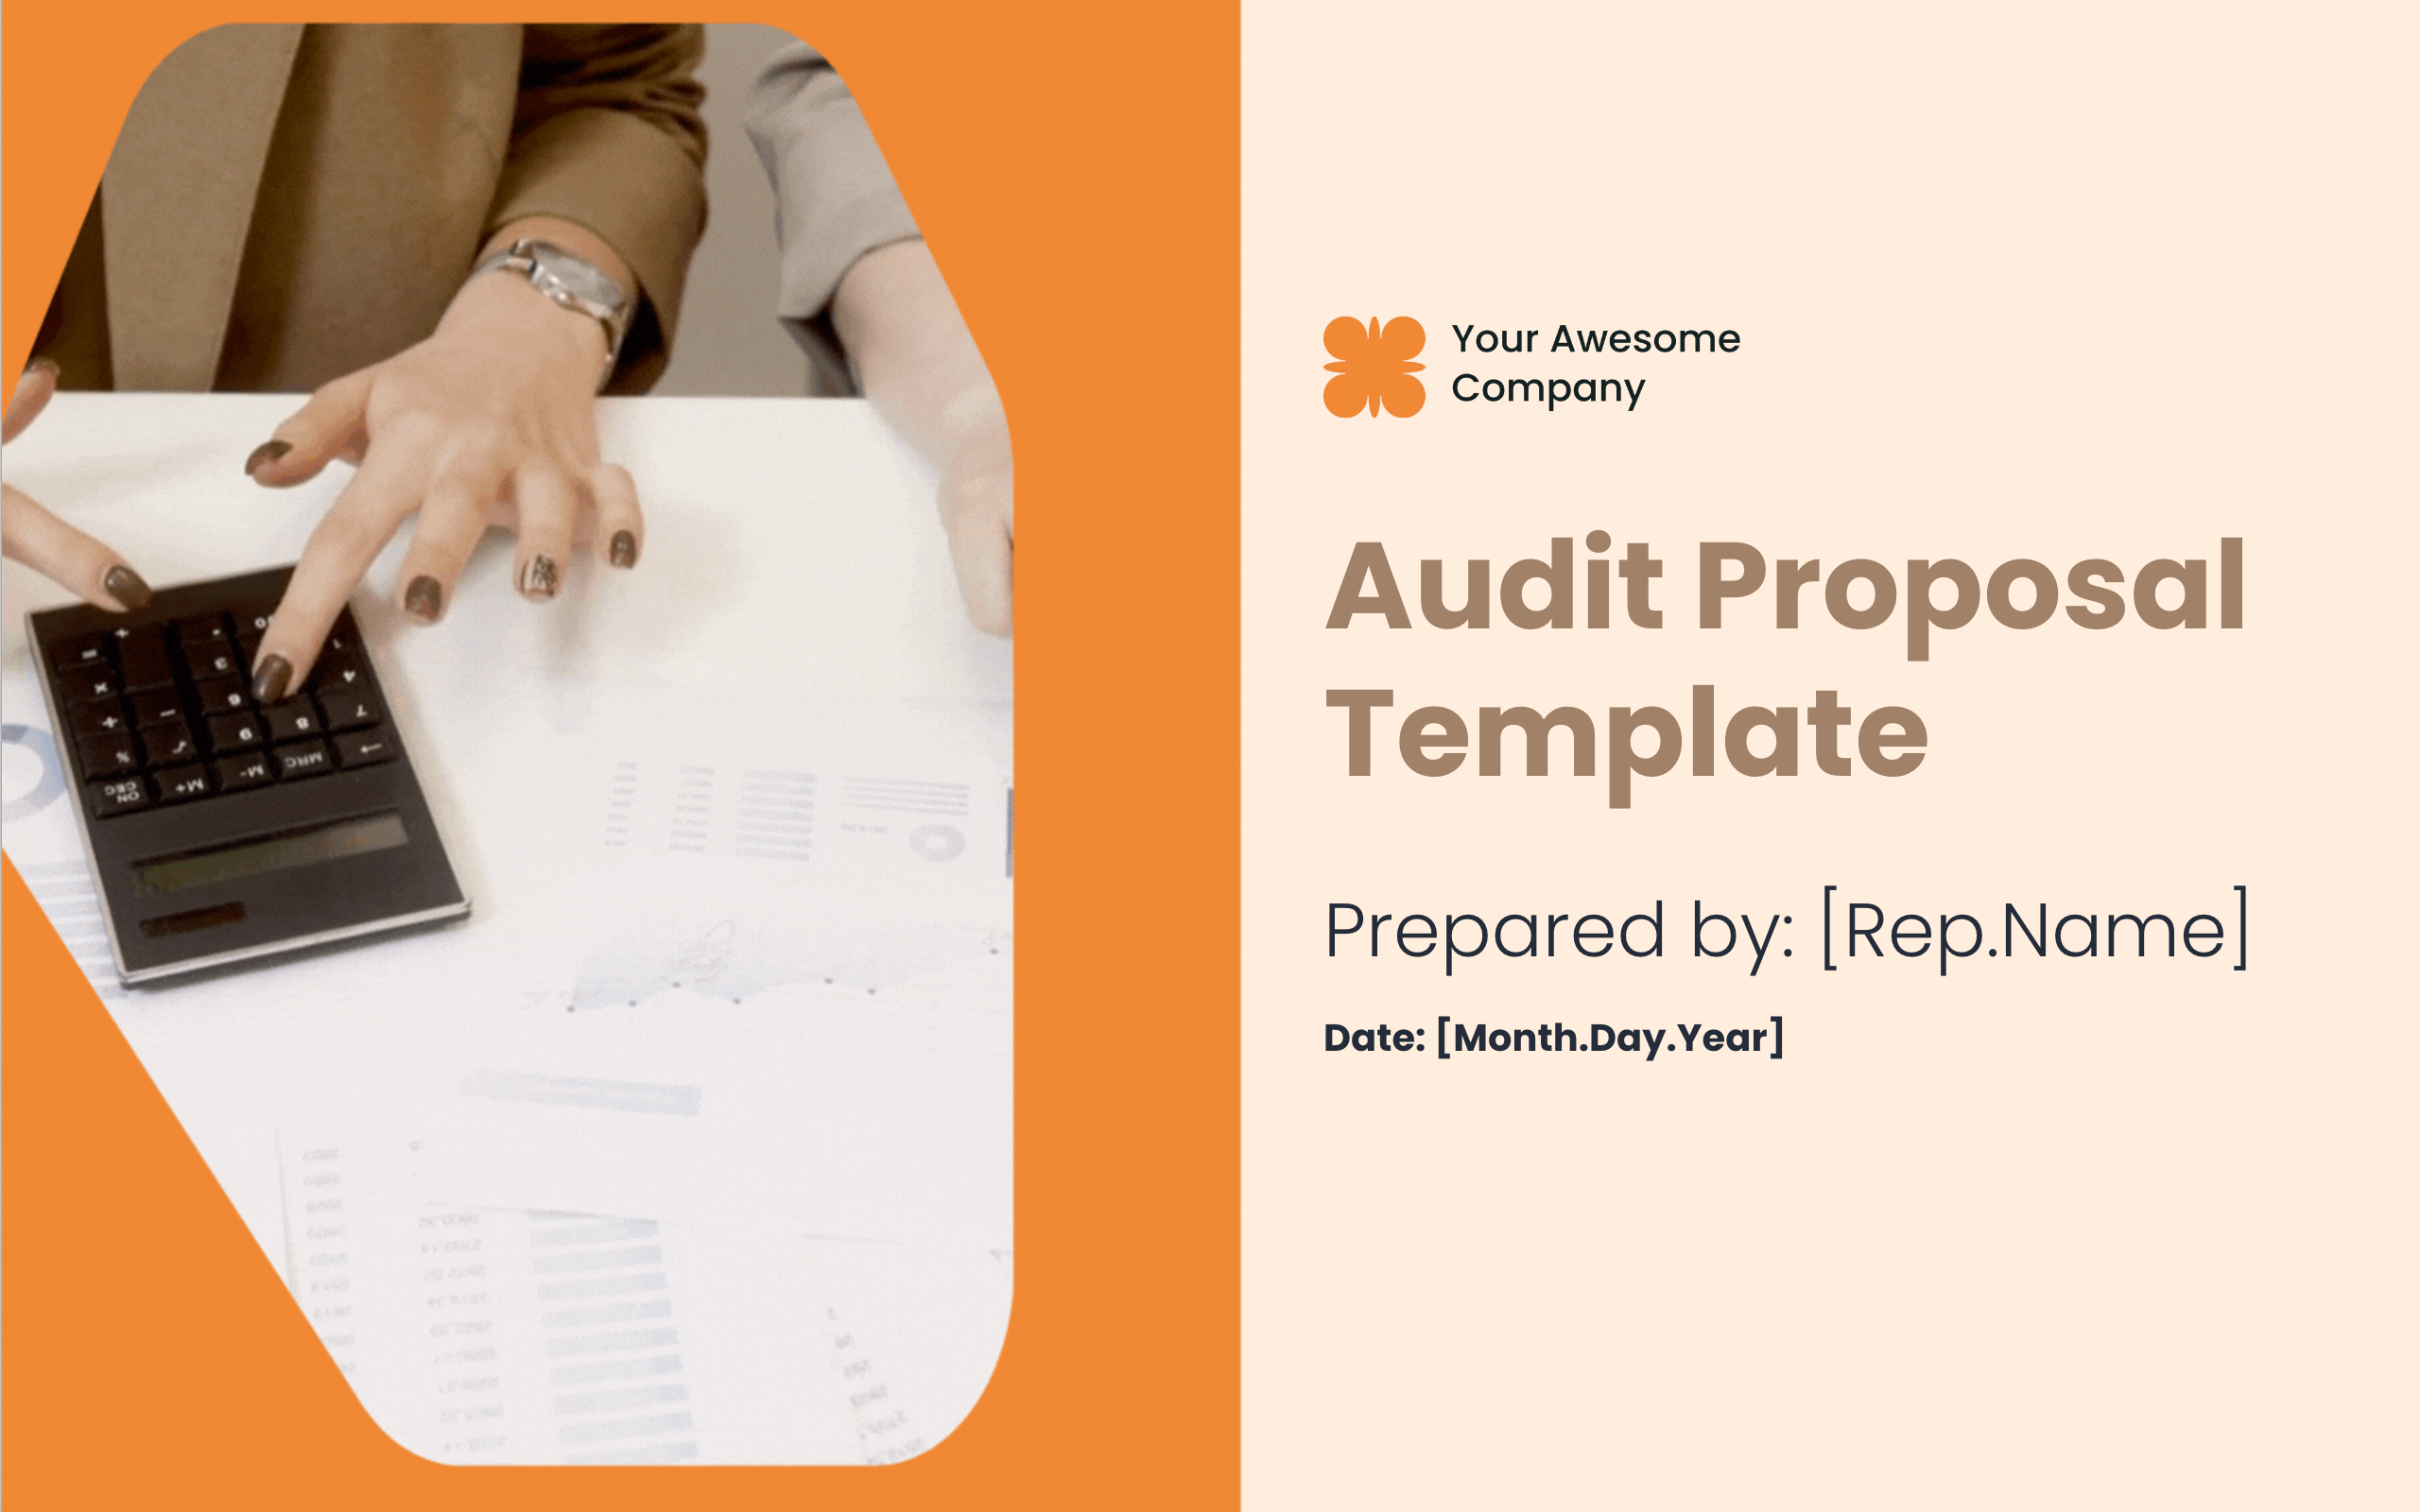 Audit Proposal Template